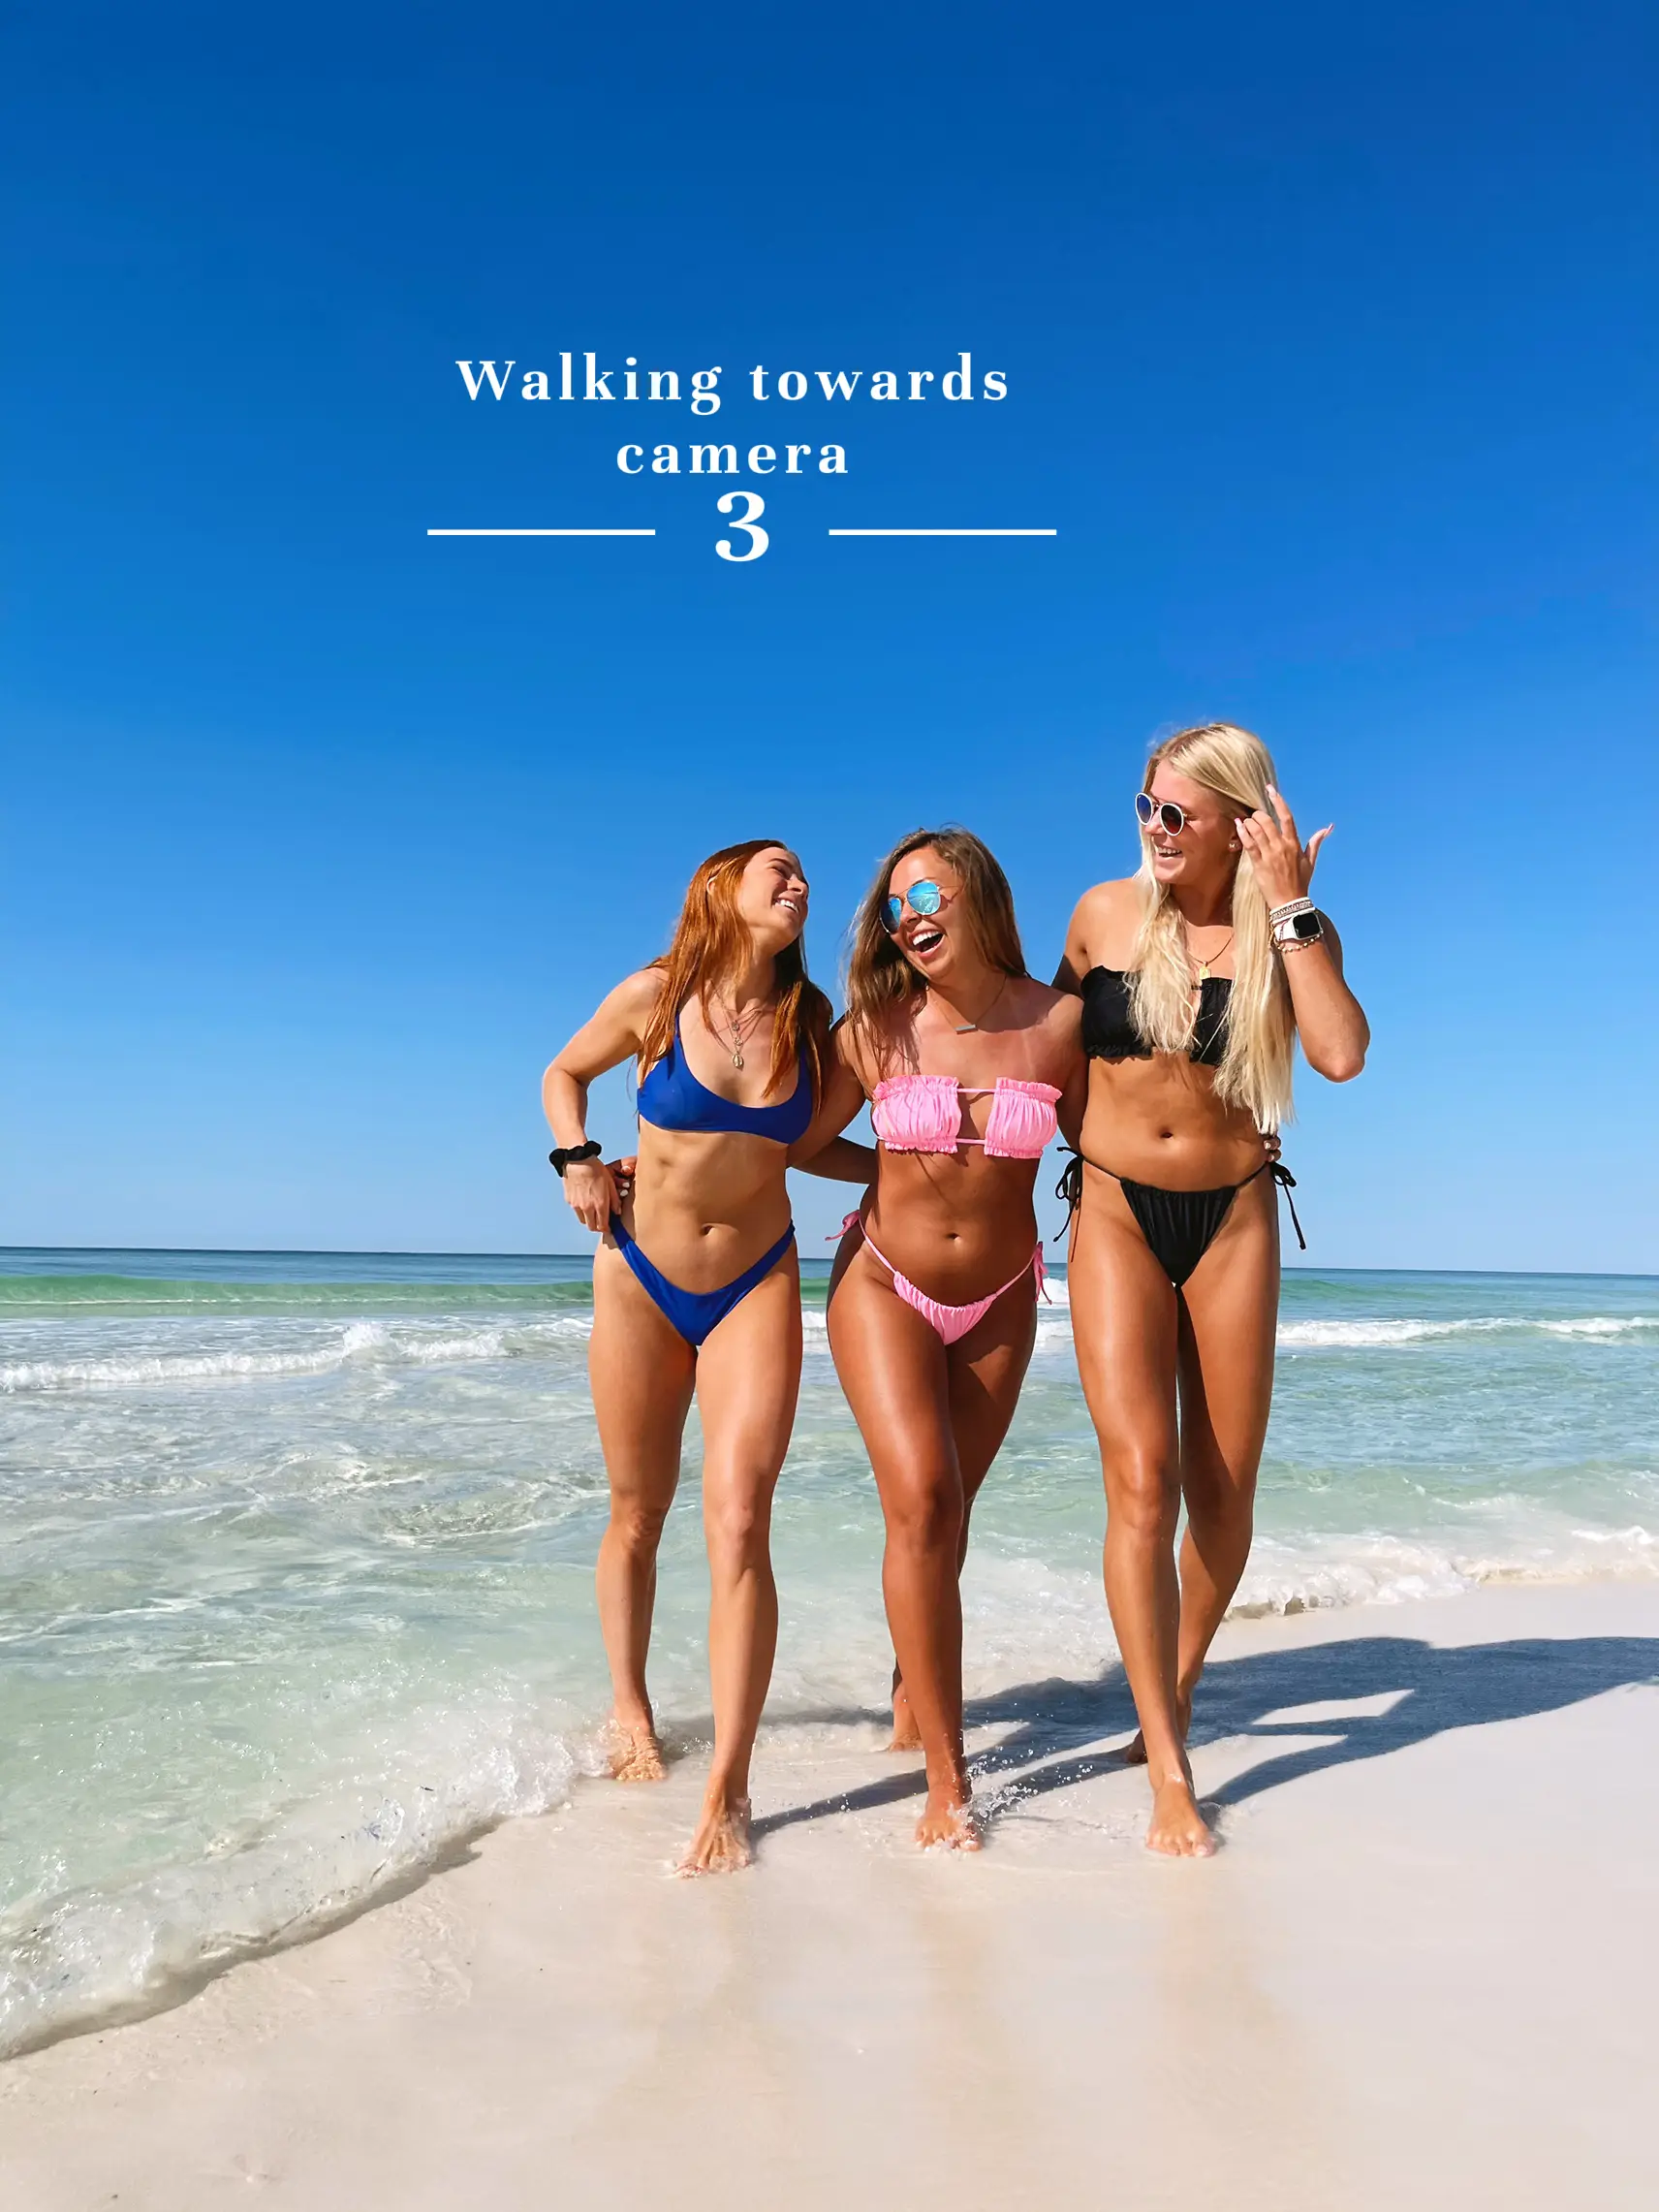  Three women are walking towards the camera on a beach.